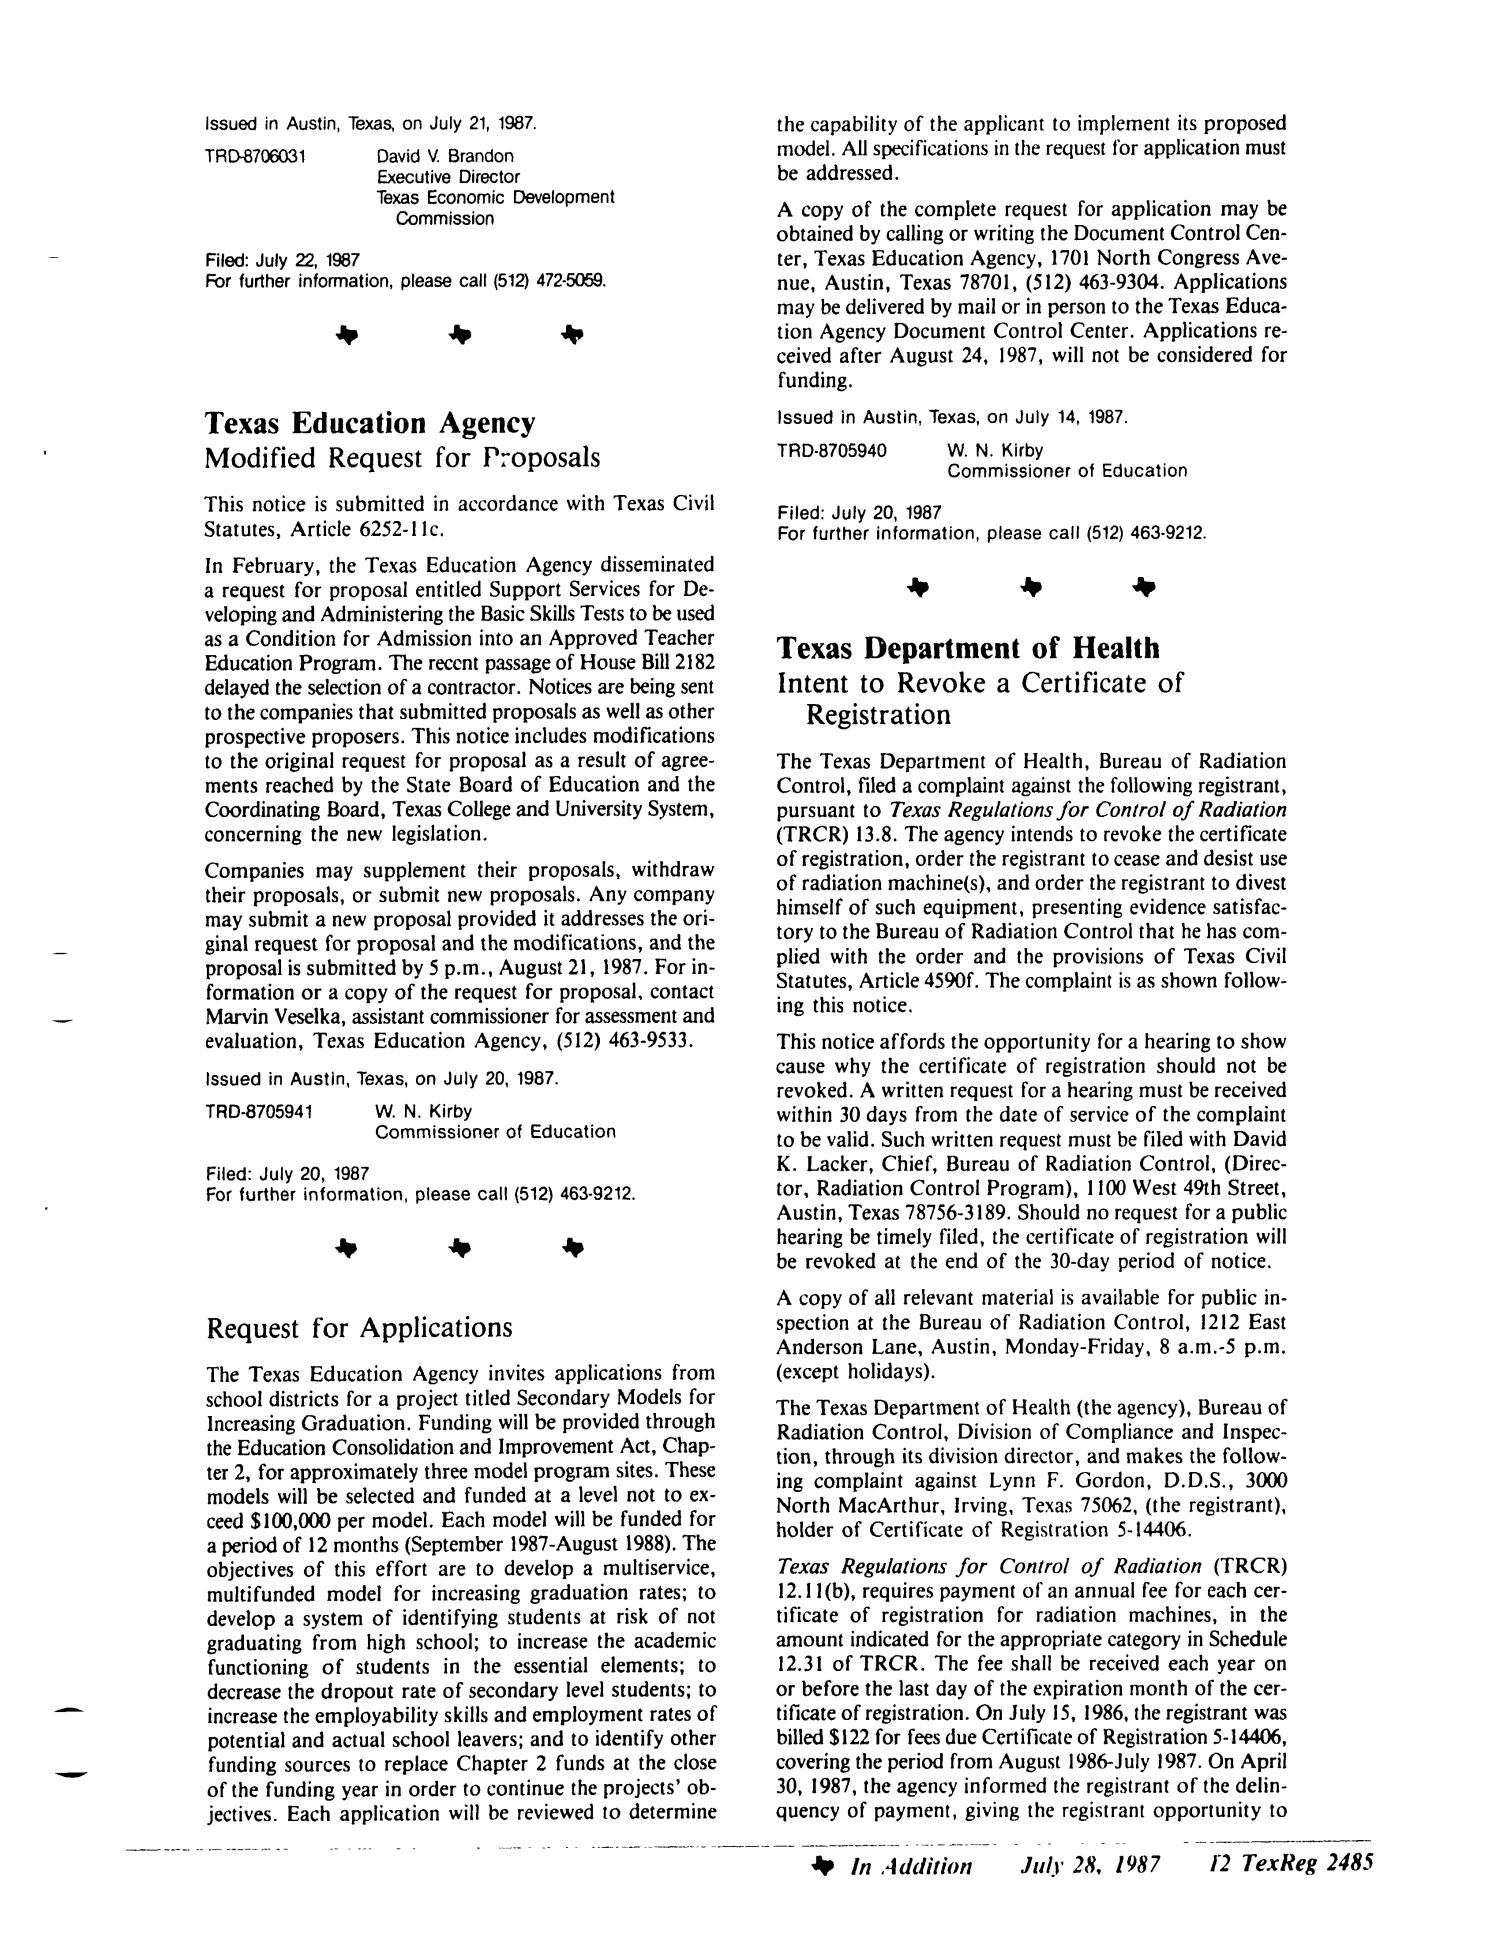 Texas Register, Volume 12, Number 57, Pages 2453-2487, July 28, 1987
                                                
                                                    2485
                                                